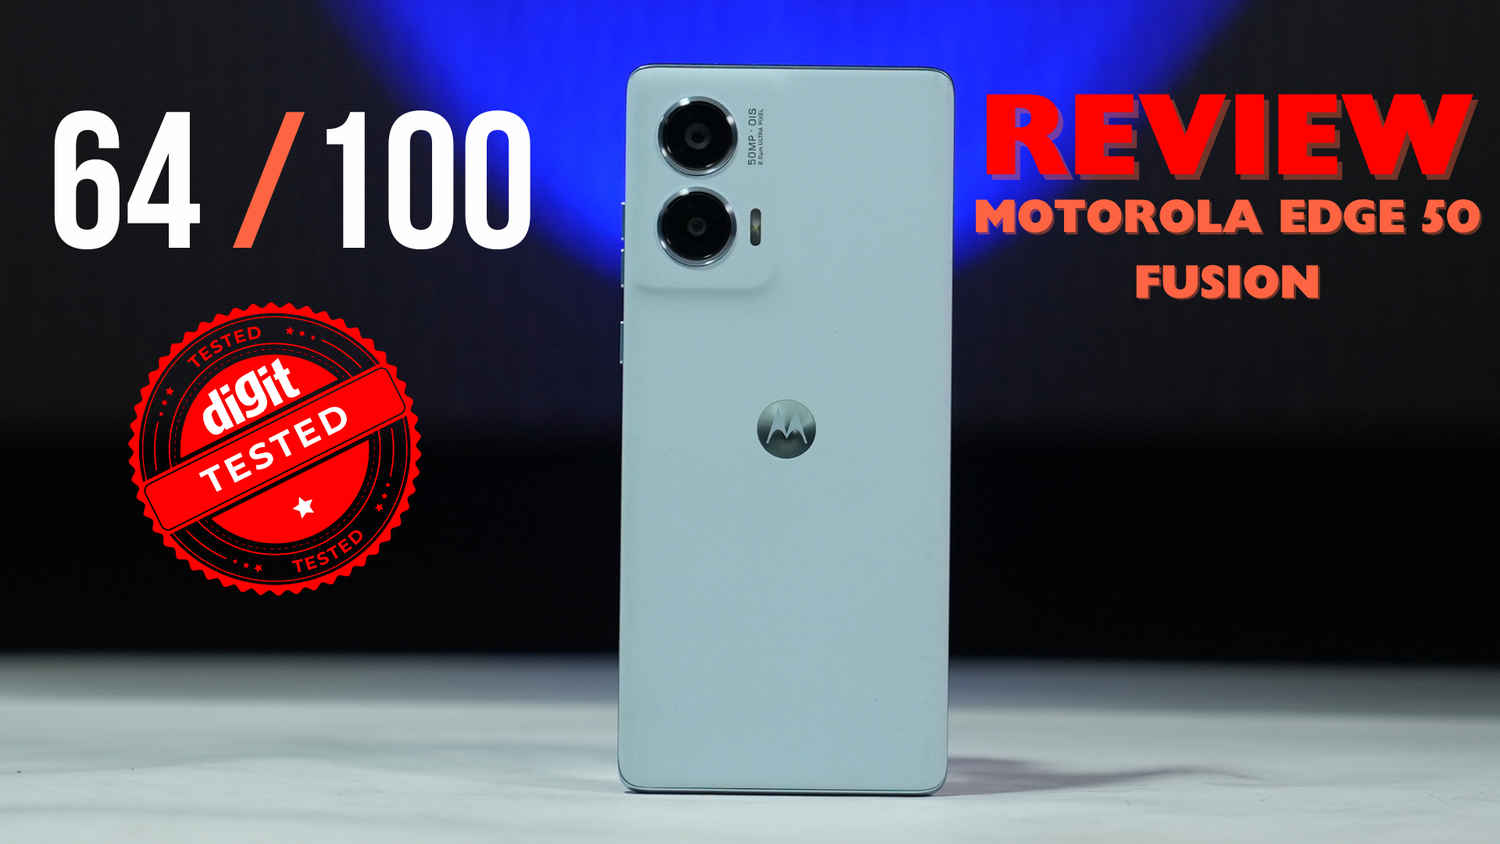 Motorola Edge 50 Fusion Review: The style champion under ₹25,000